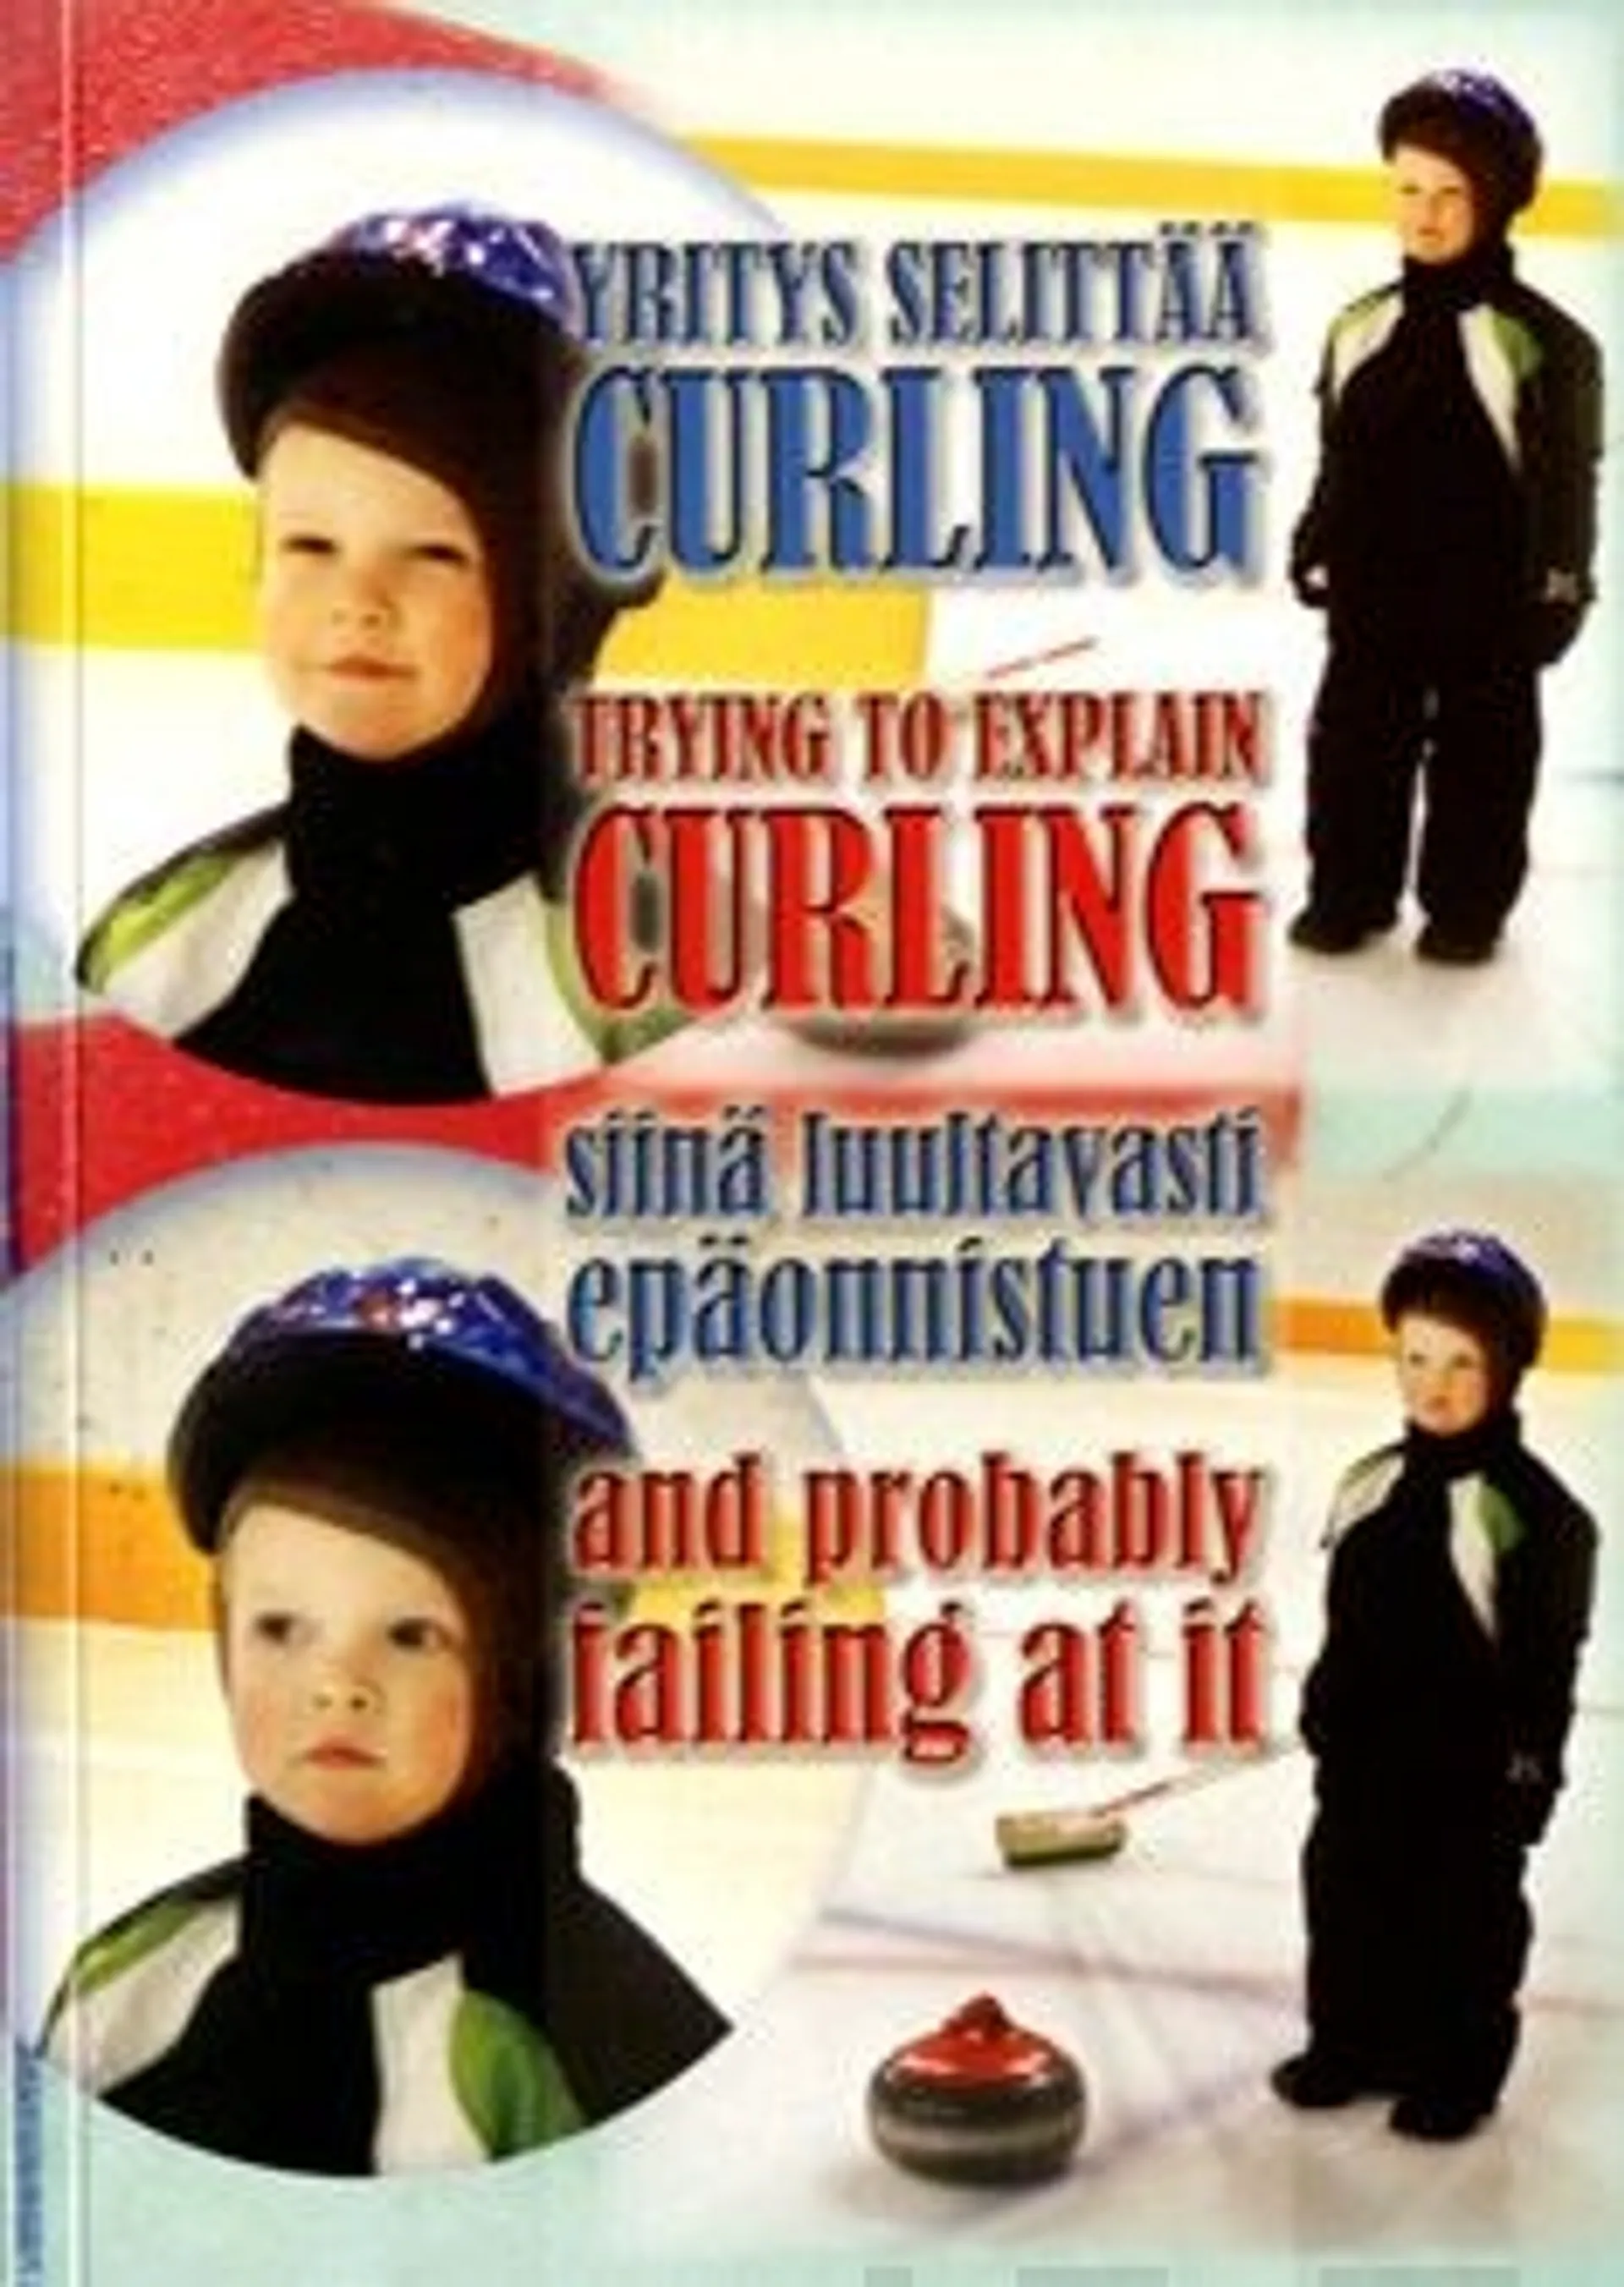 Gregorwich, Yritys selittää curling